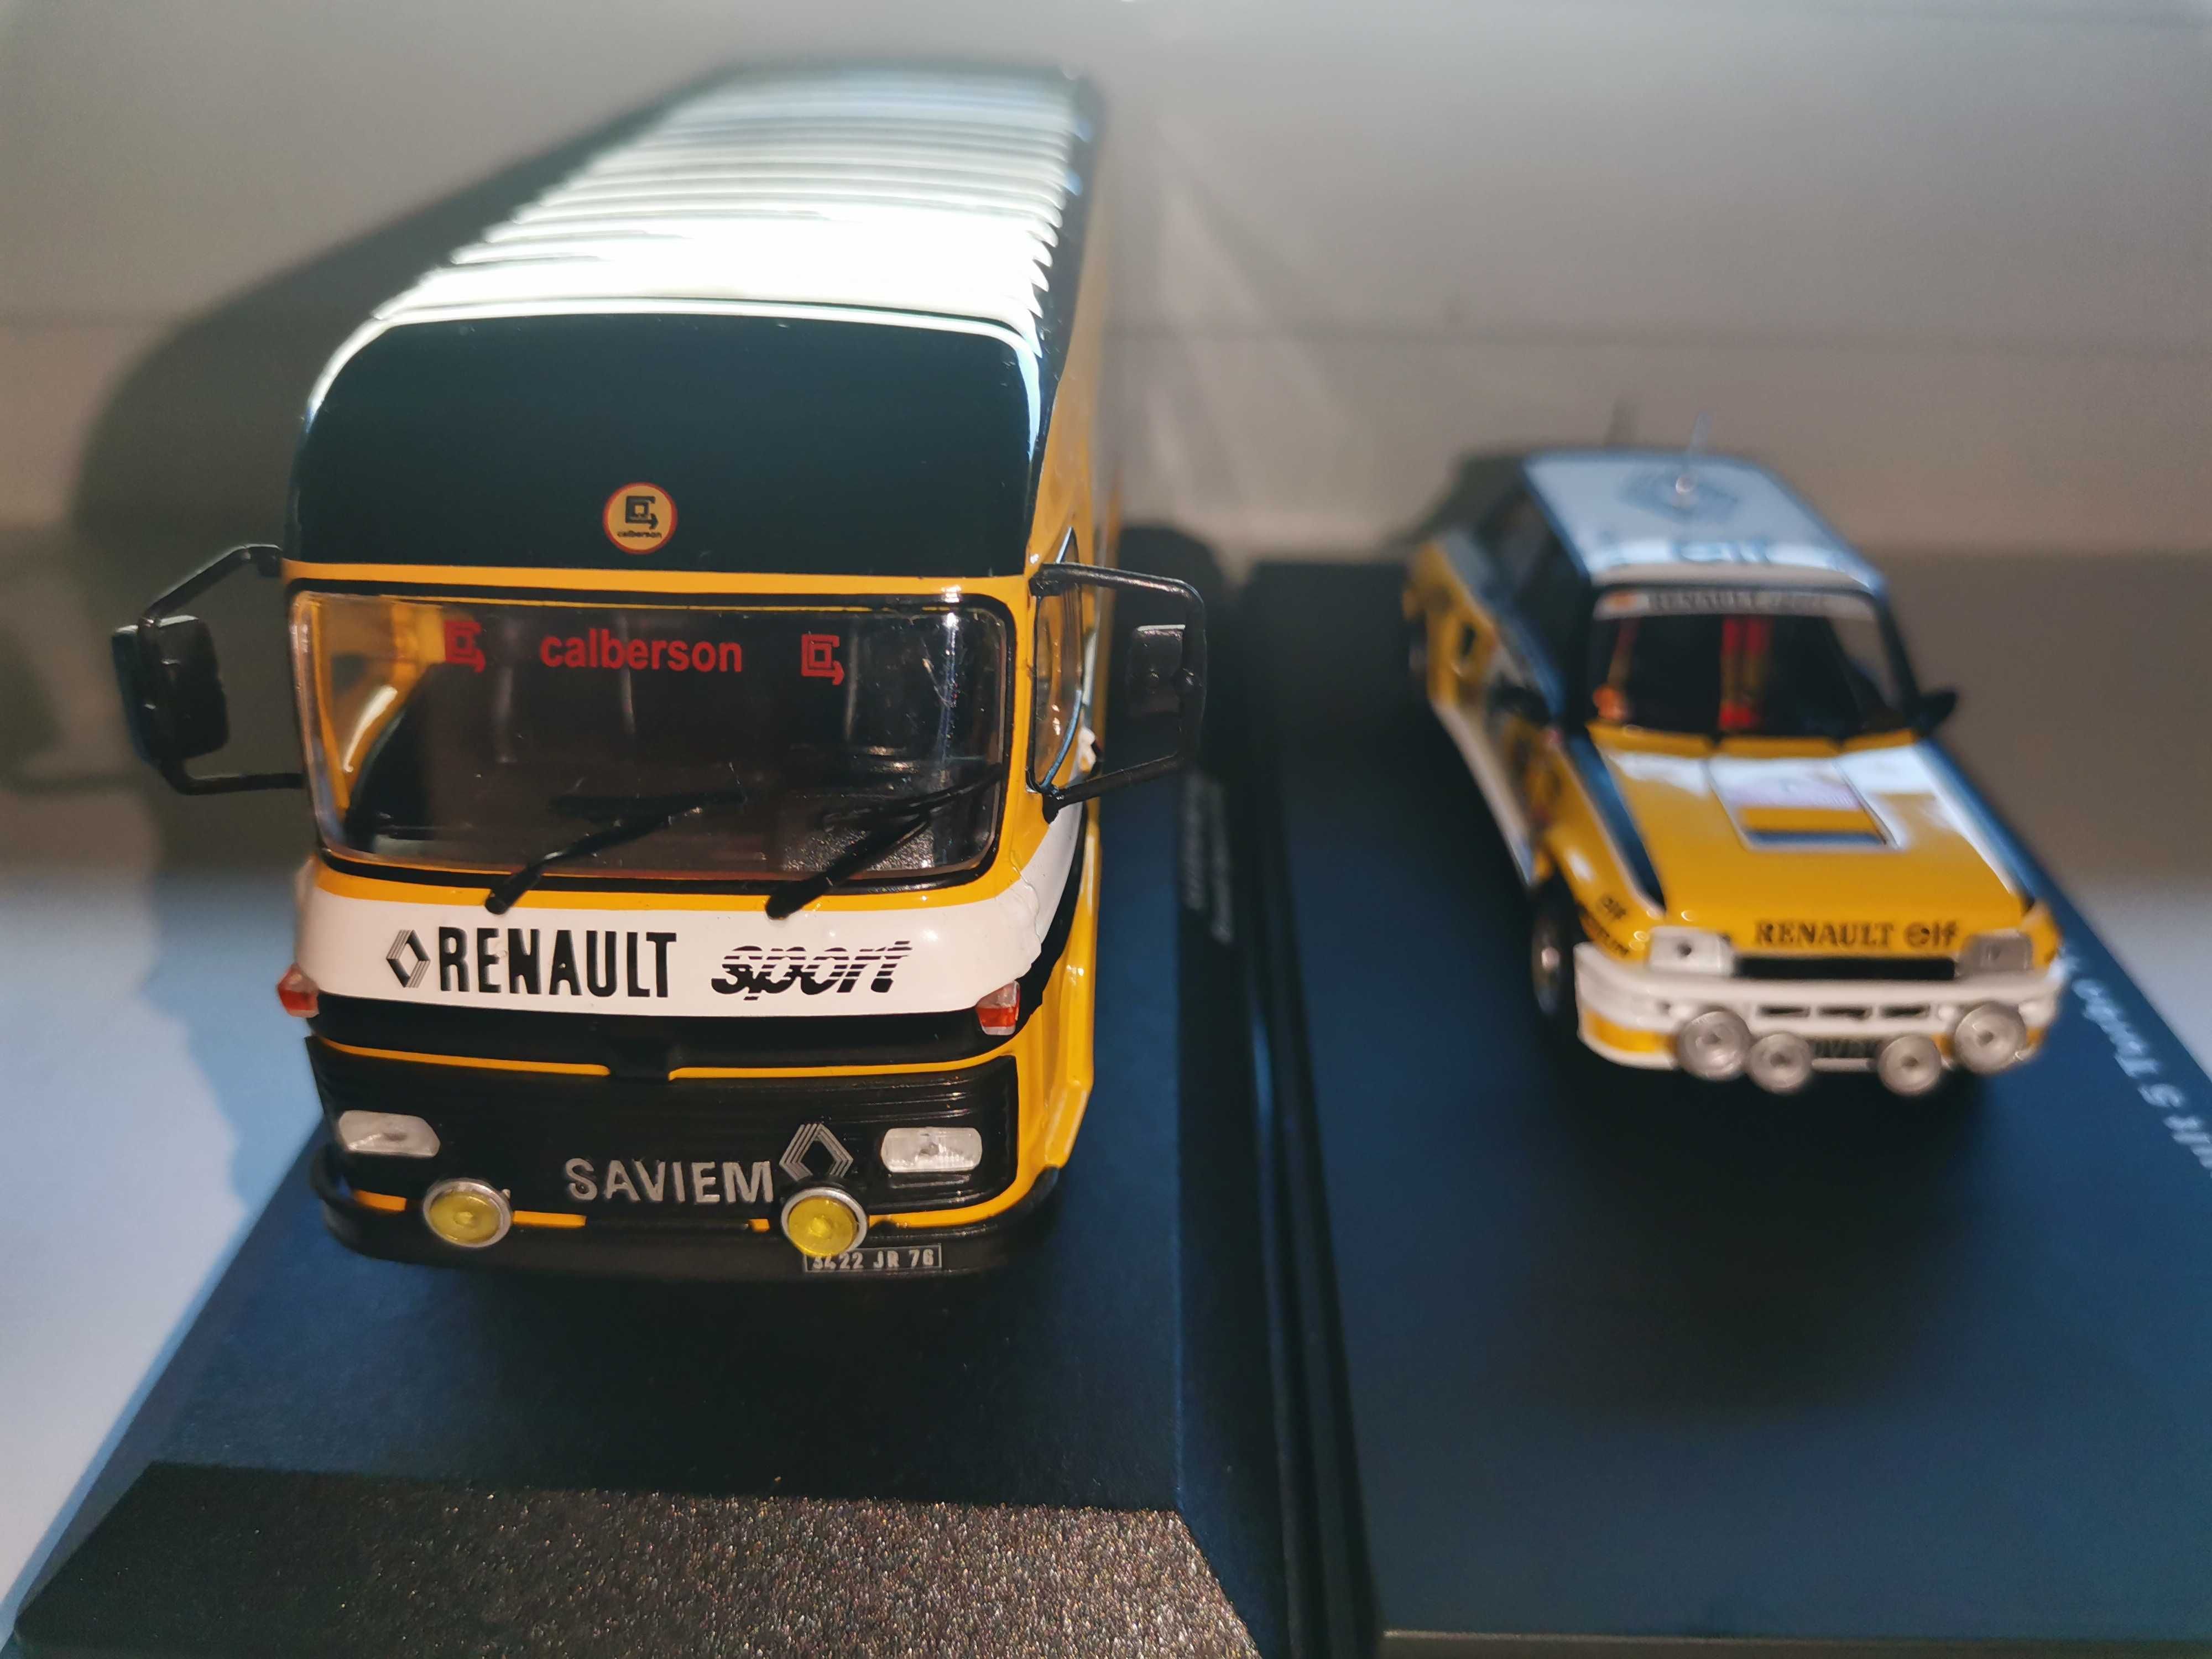 Team Renault Sport Rally